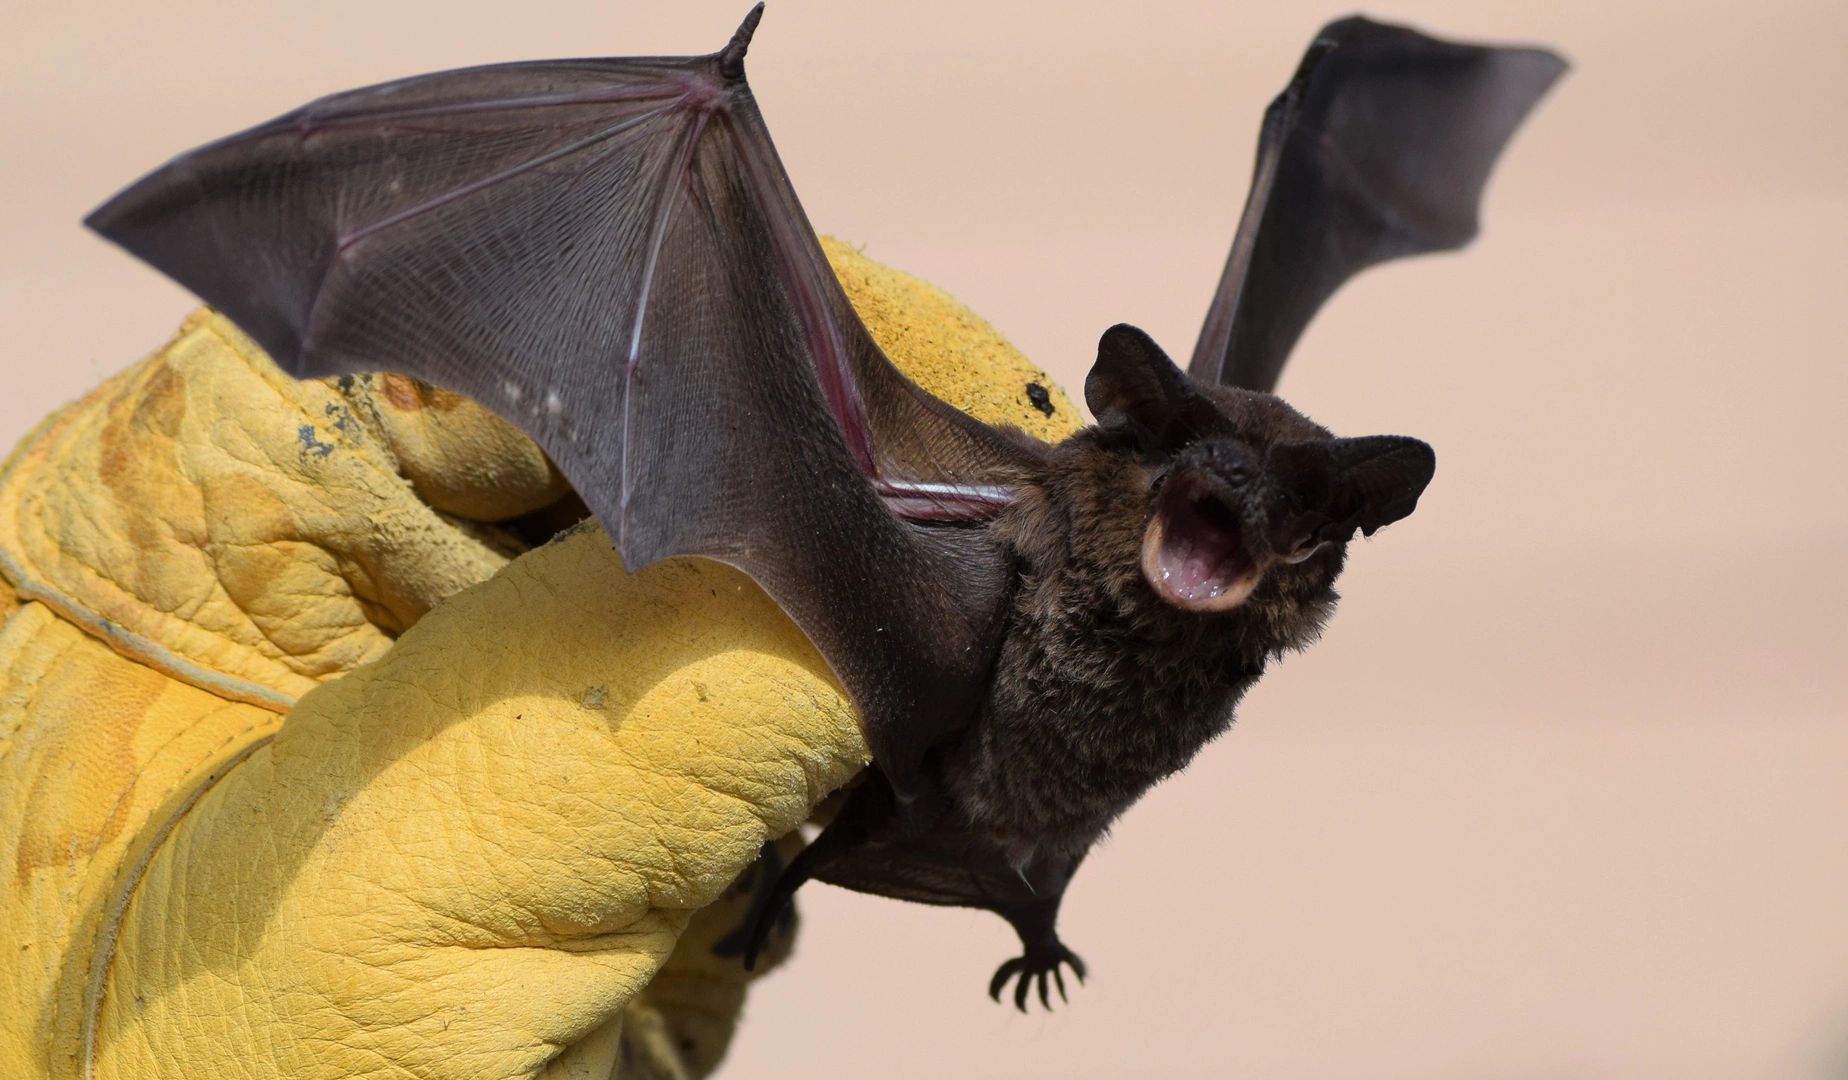 AAAC Wildlife Removal of South Carolina - Bat Removal, Bat Control